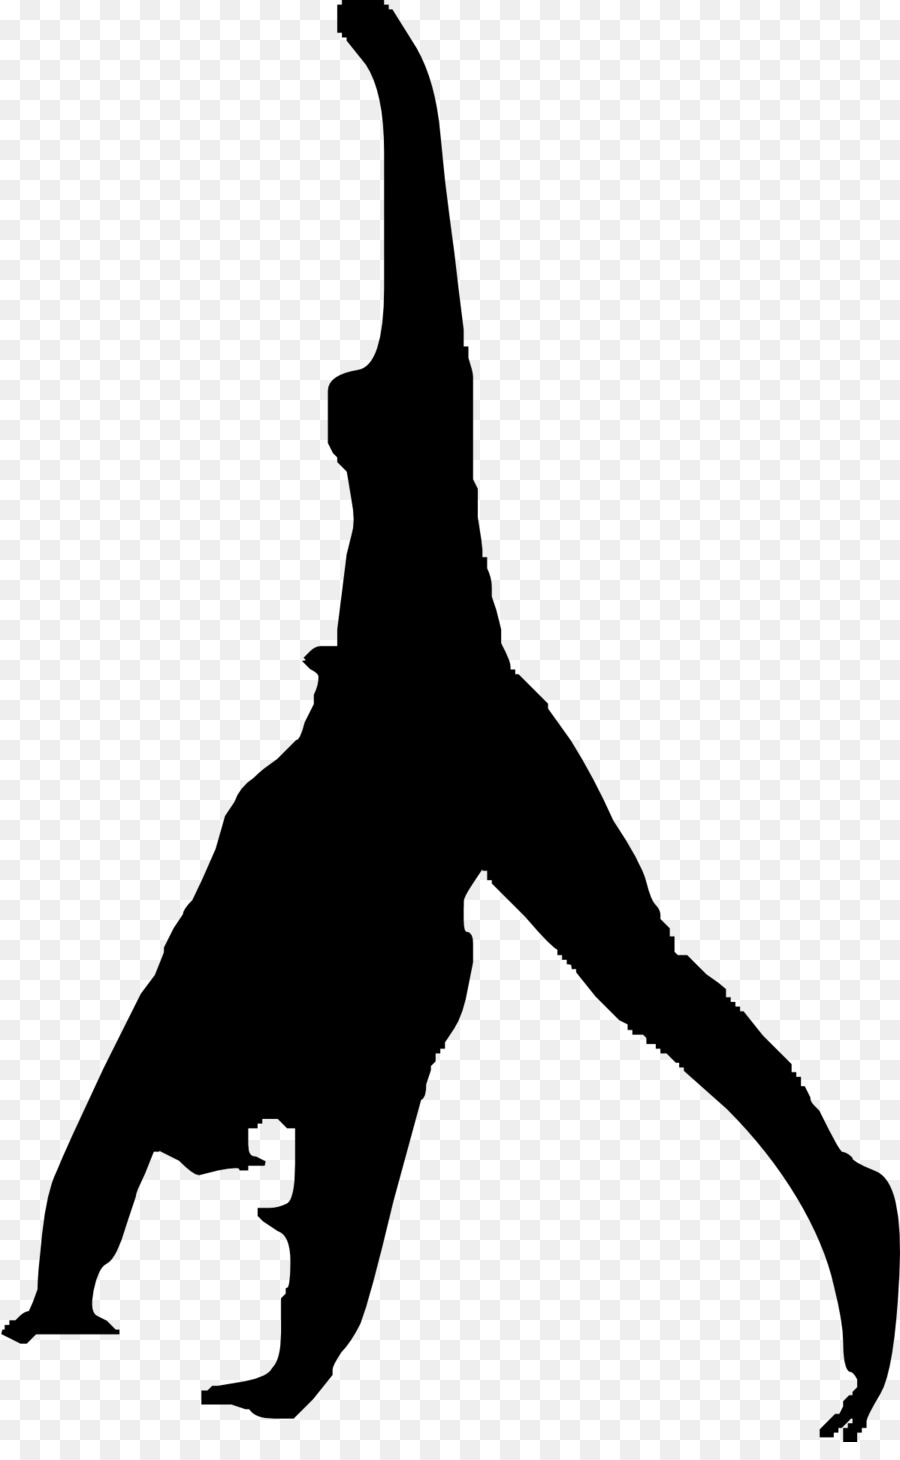 Parkour Gymnastics Flip Clip art - gymnastics png download - 1198*1920 - Free Transparent Parkour png Download.